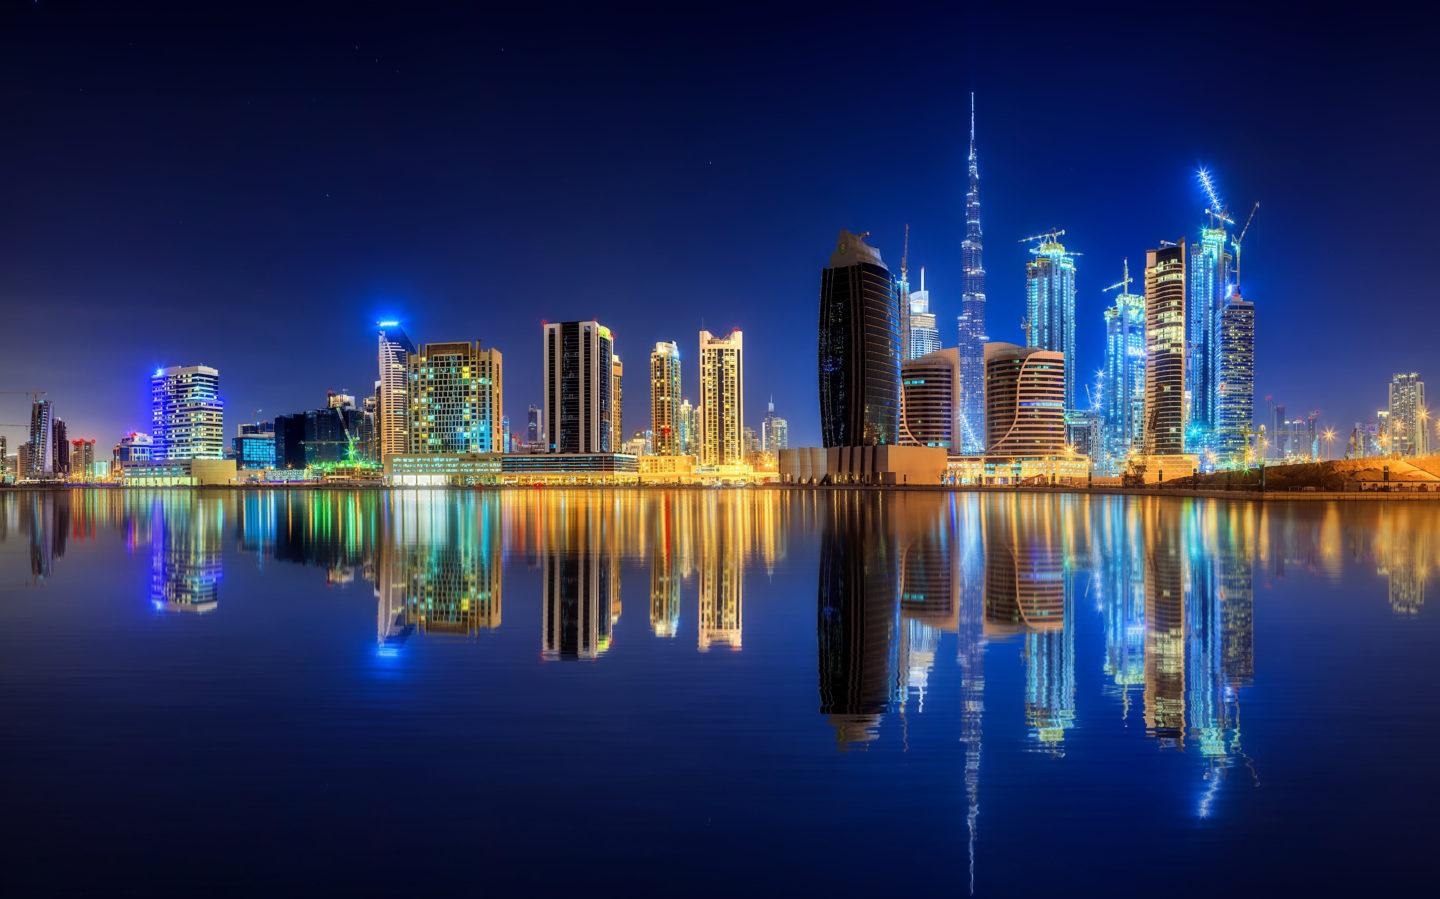 Dubai United Arab Emirates Persian Gulf Reflection In Water 4k